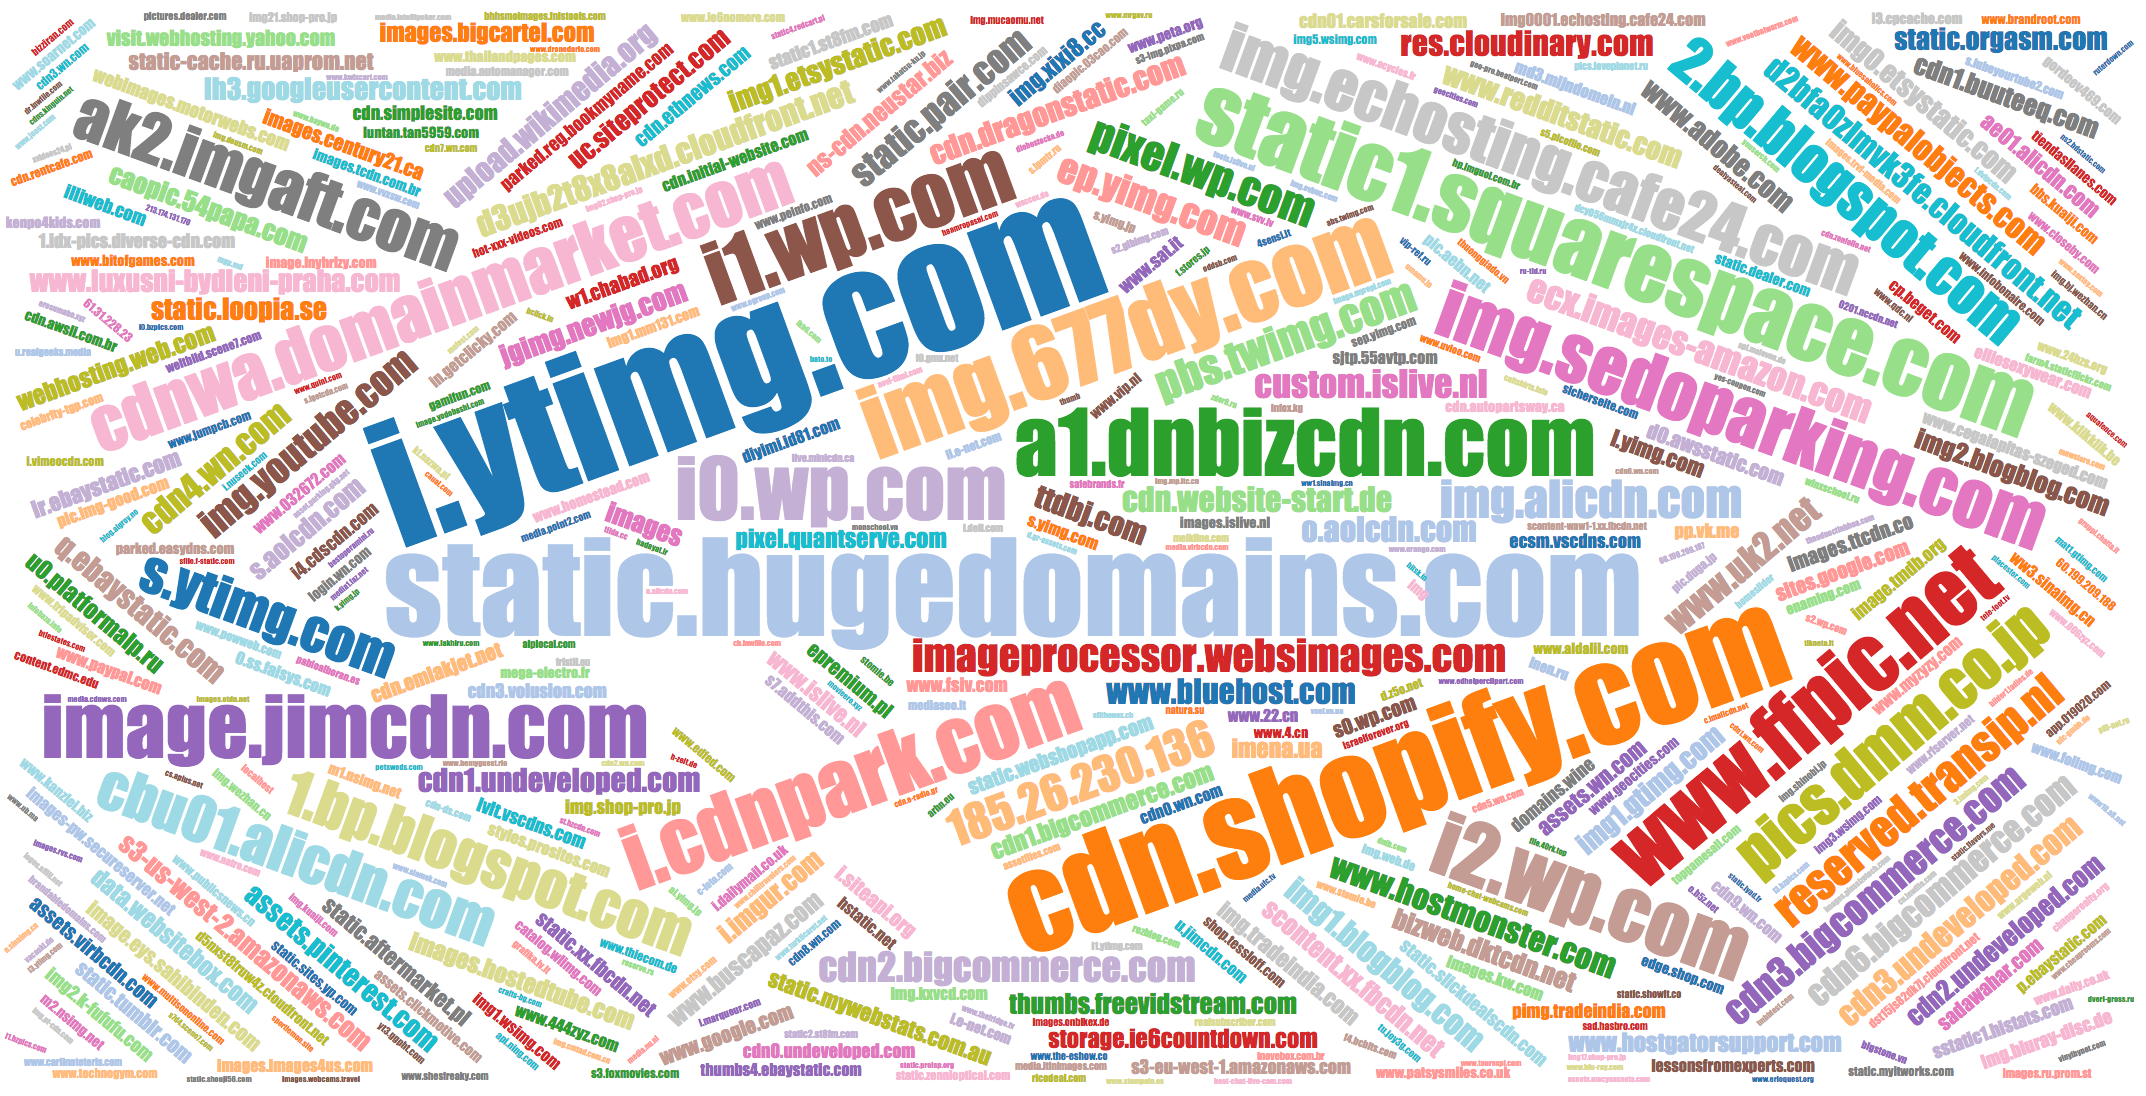 Popular names of IMG domains mediaseo.it, mediaprocessor.websimages.com, etc.